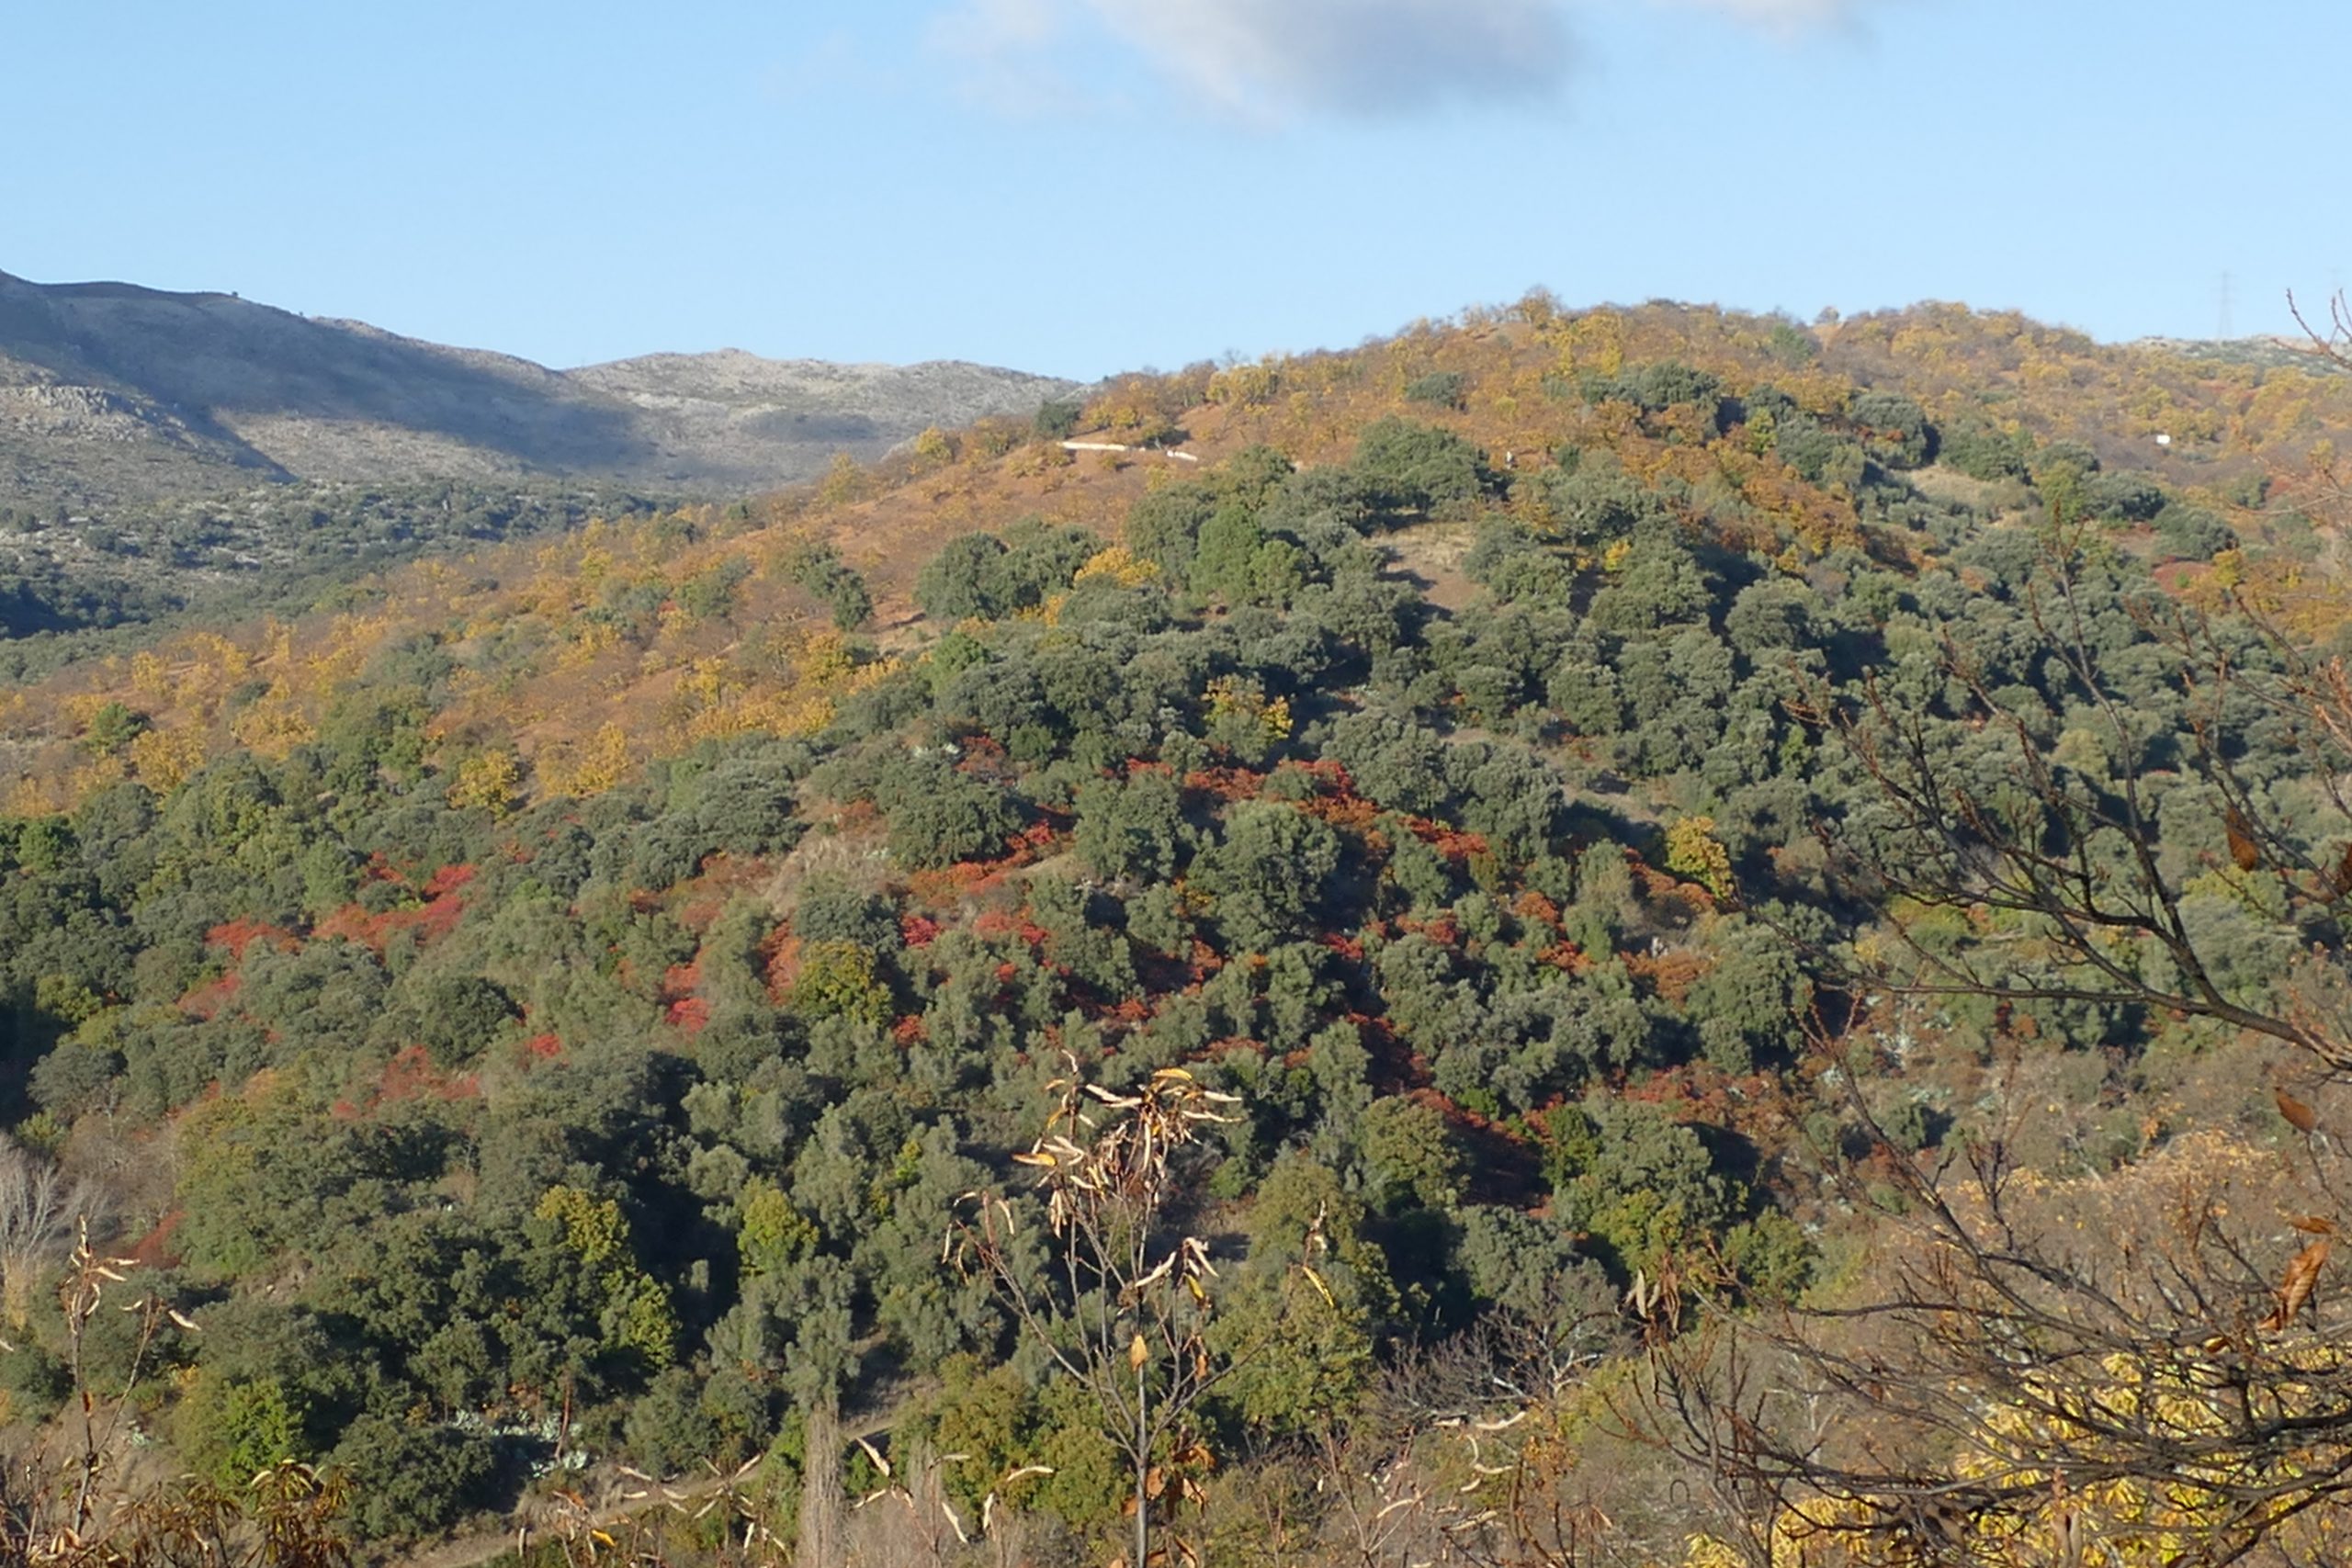 Landscapes of Harraval, the High Genal, in the Serrania de Ronda.